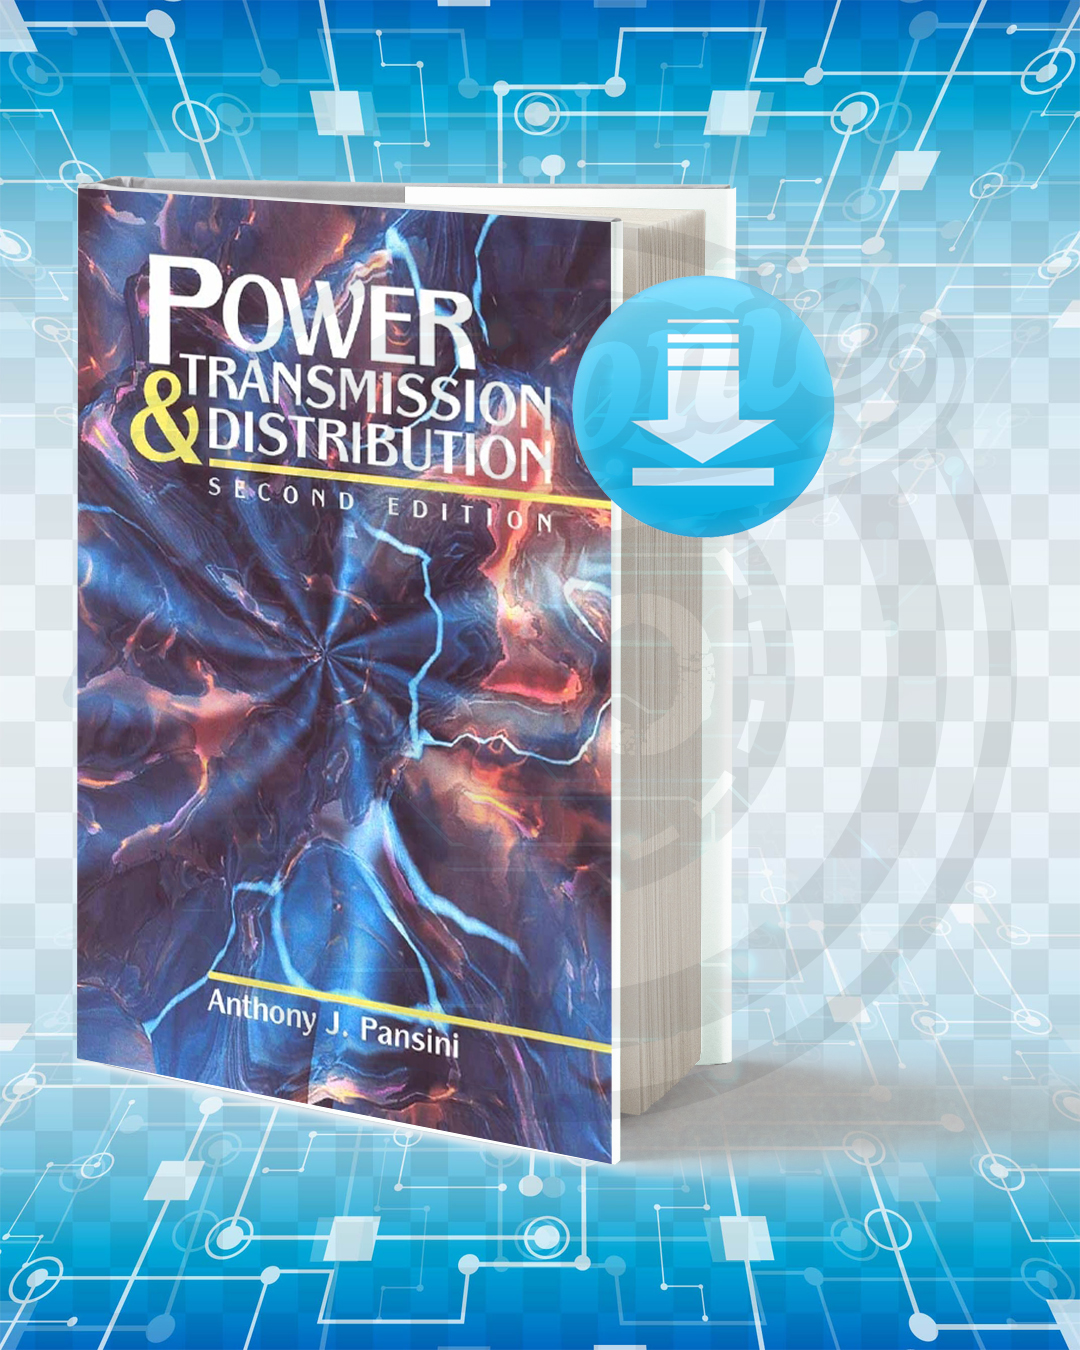 Пауэр книги. Power Engineering книга. Power book pdf. Пауэр Трансмишн Тула отзывы. Site transmission line Safety Handbook pdf.